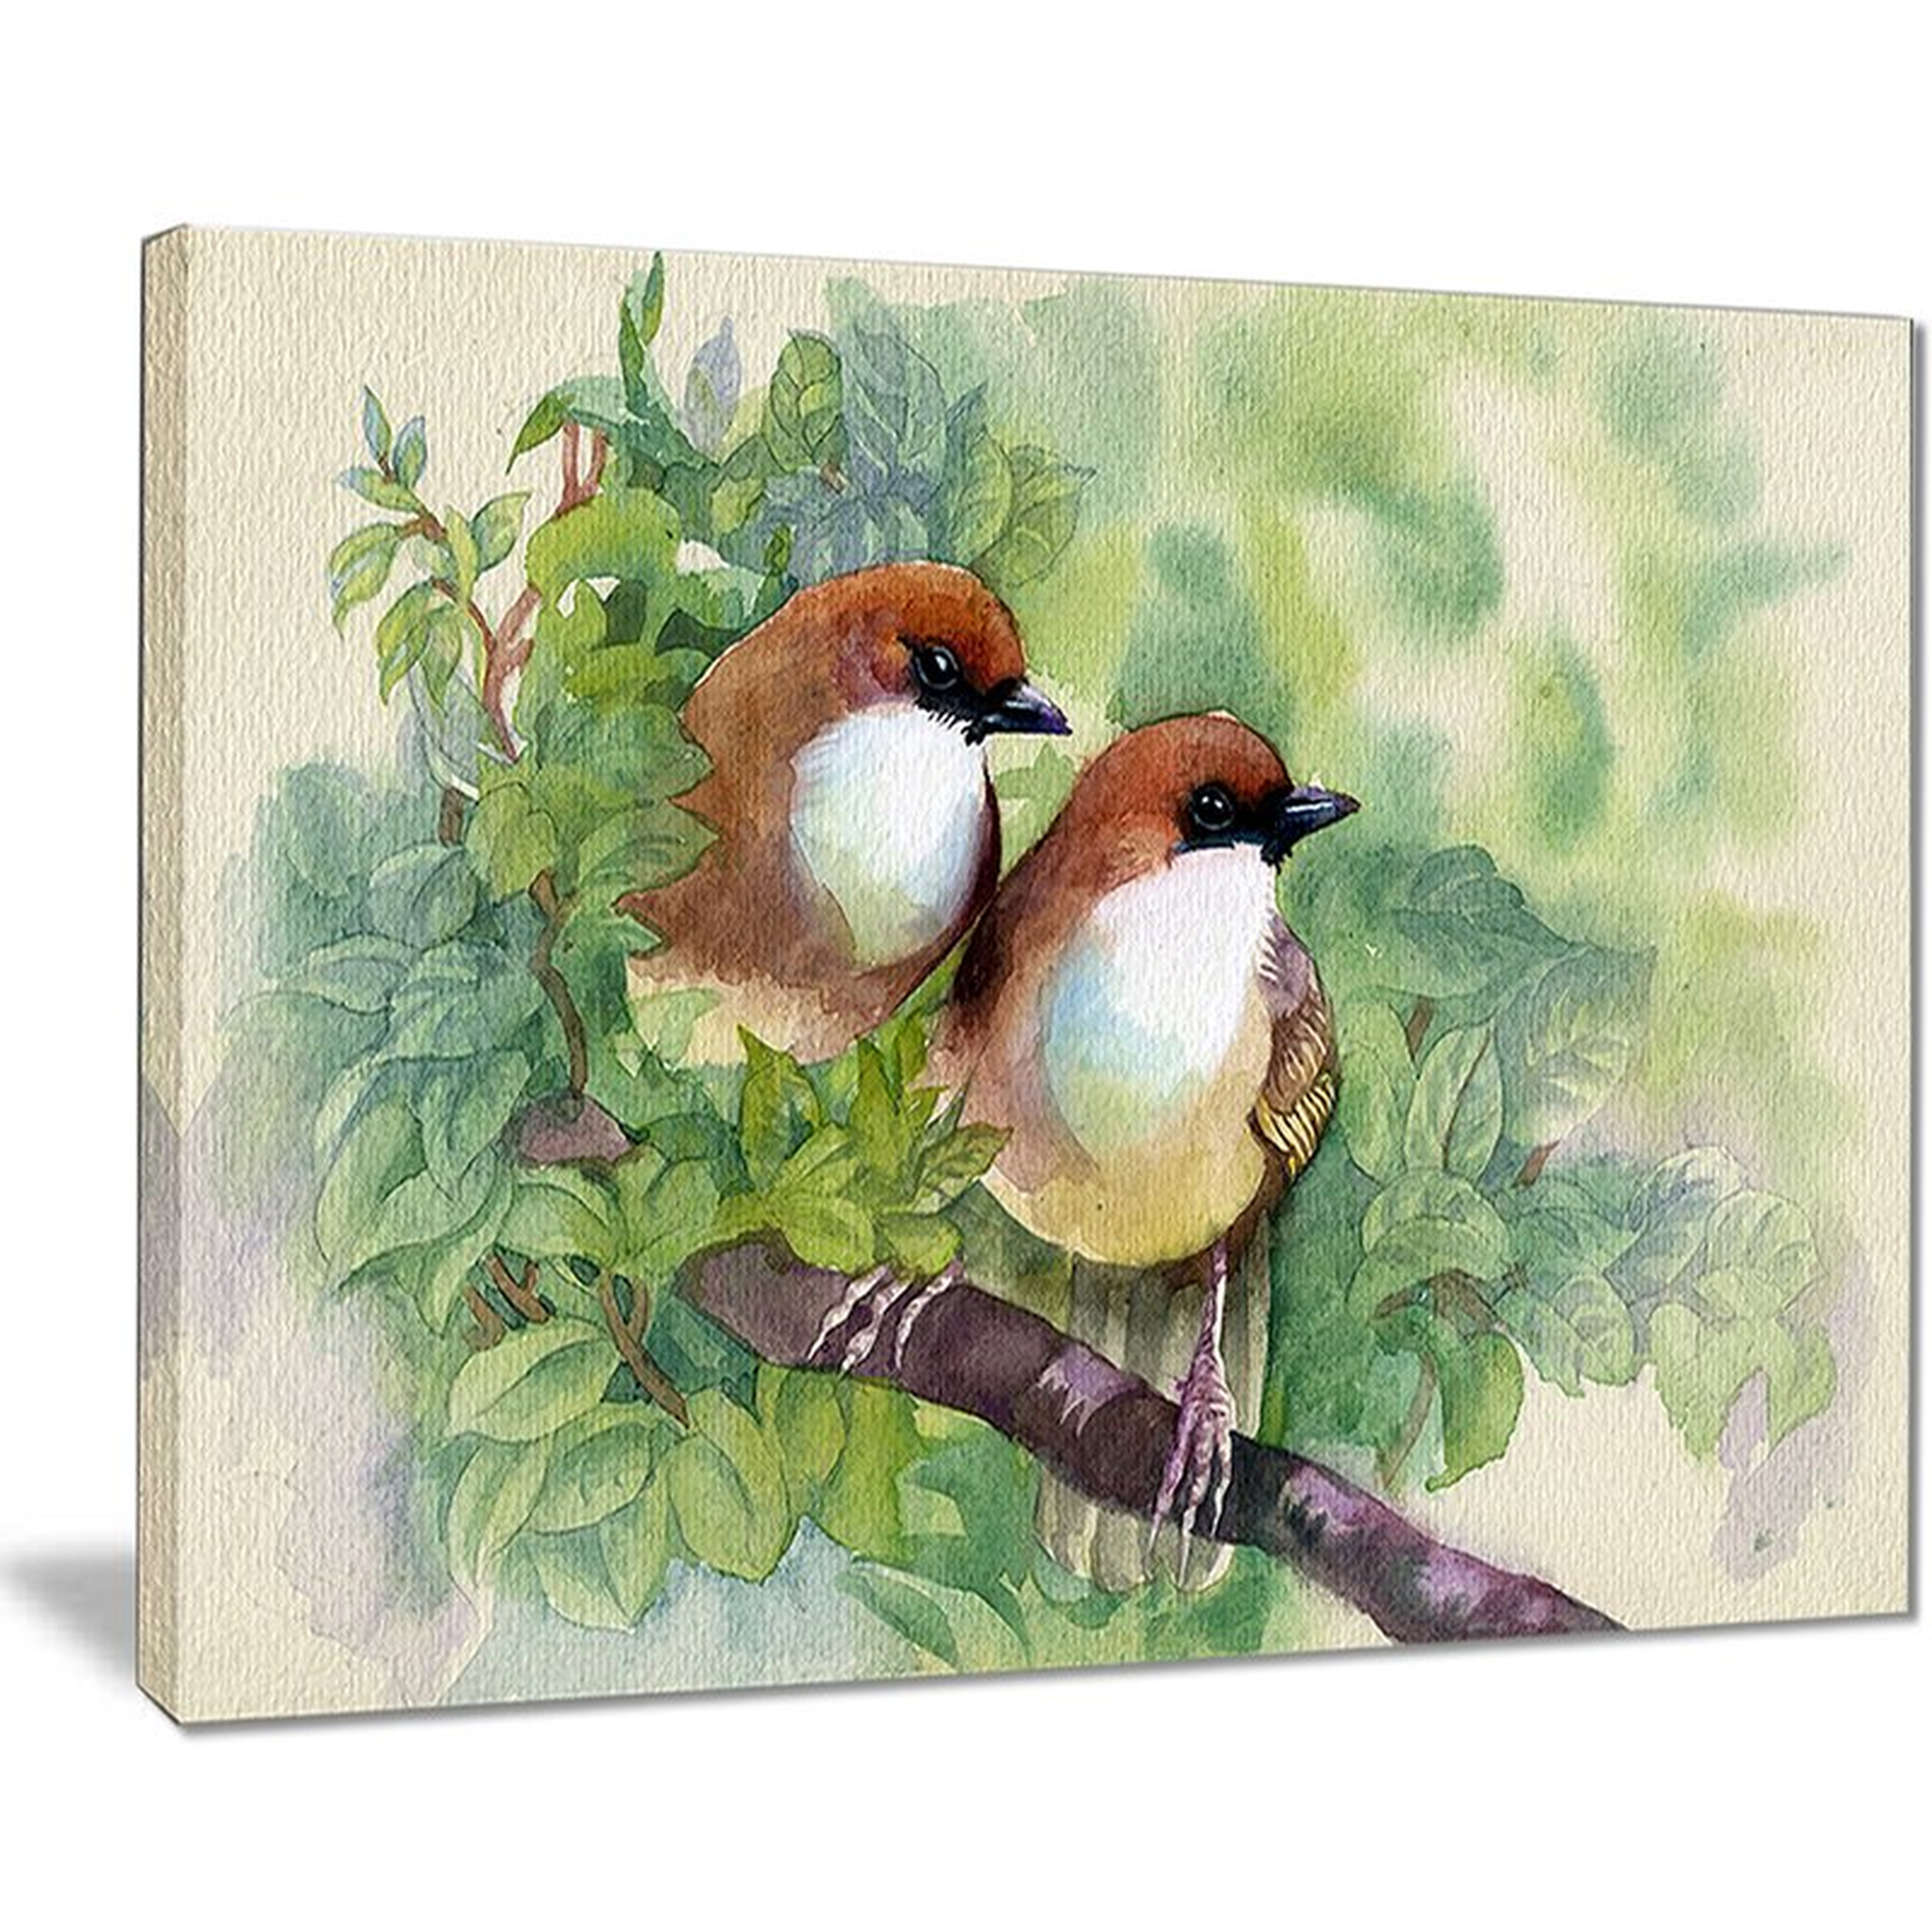 'Birds of Spring' Oil Painting Print on Canvas - Wayfair